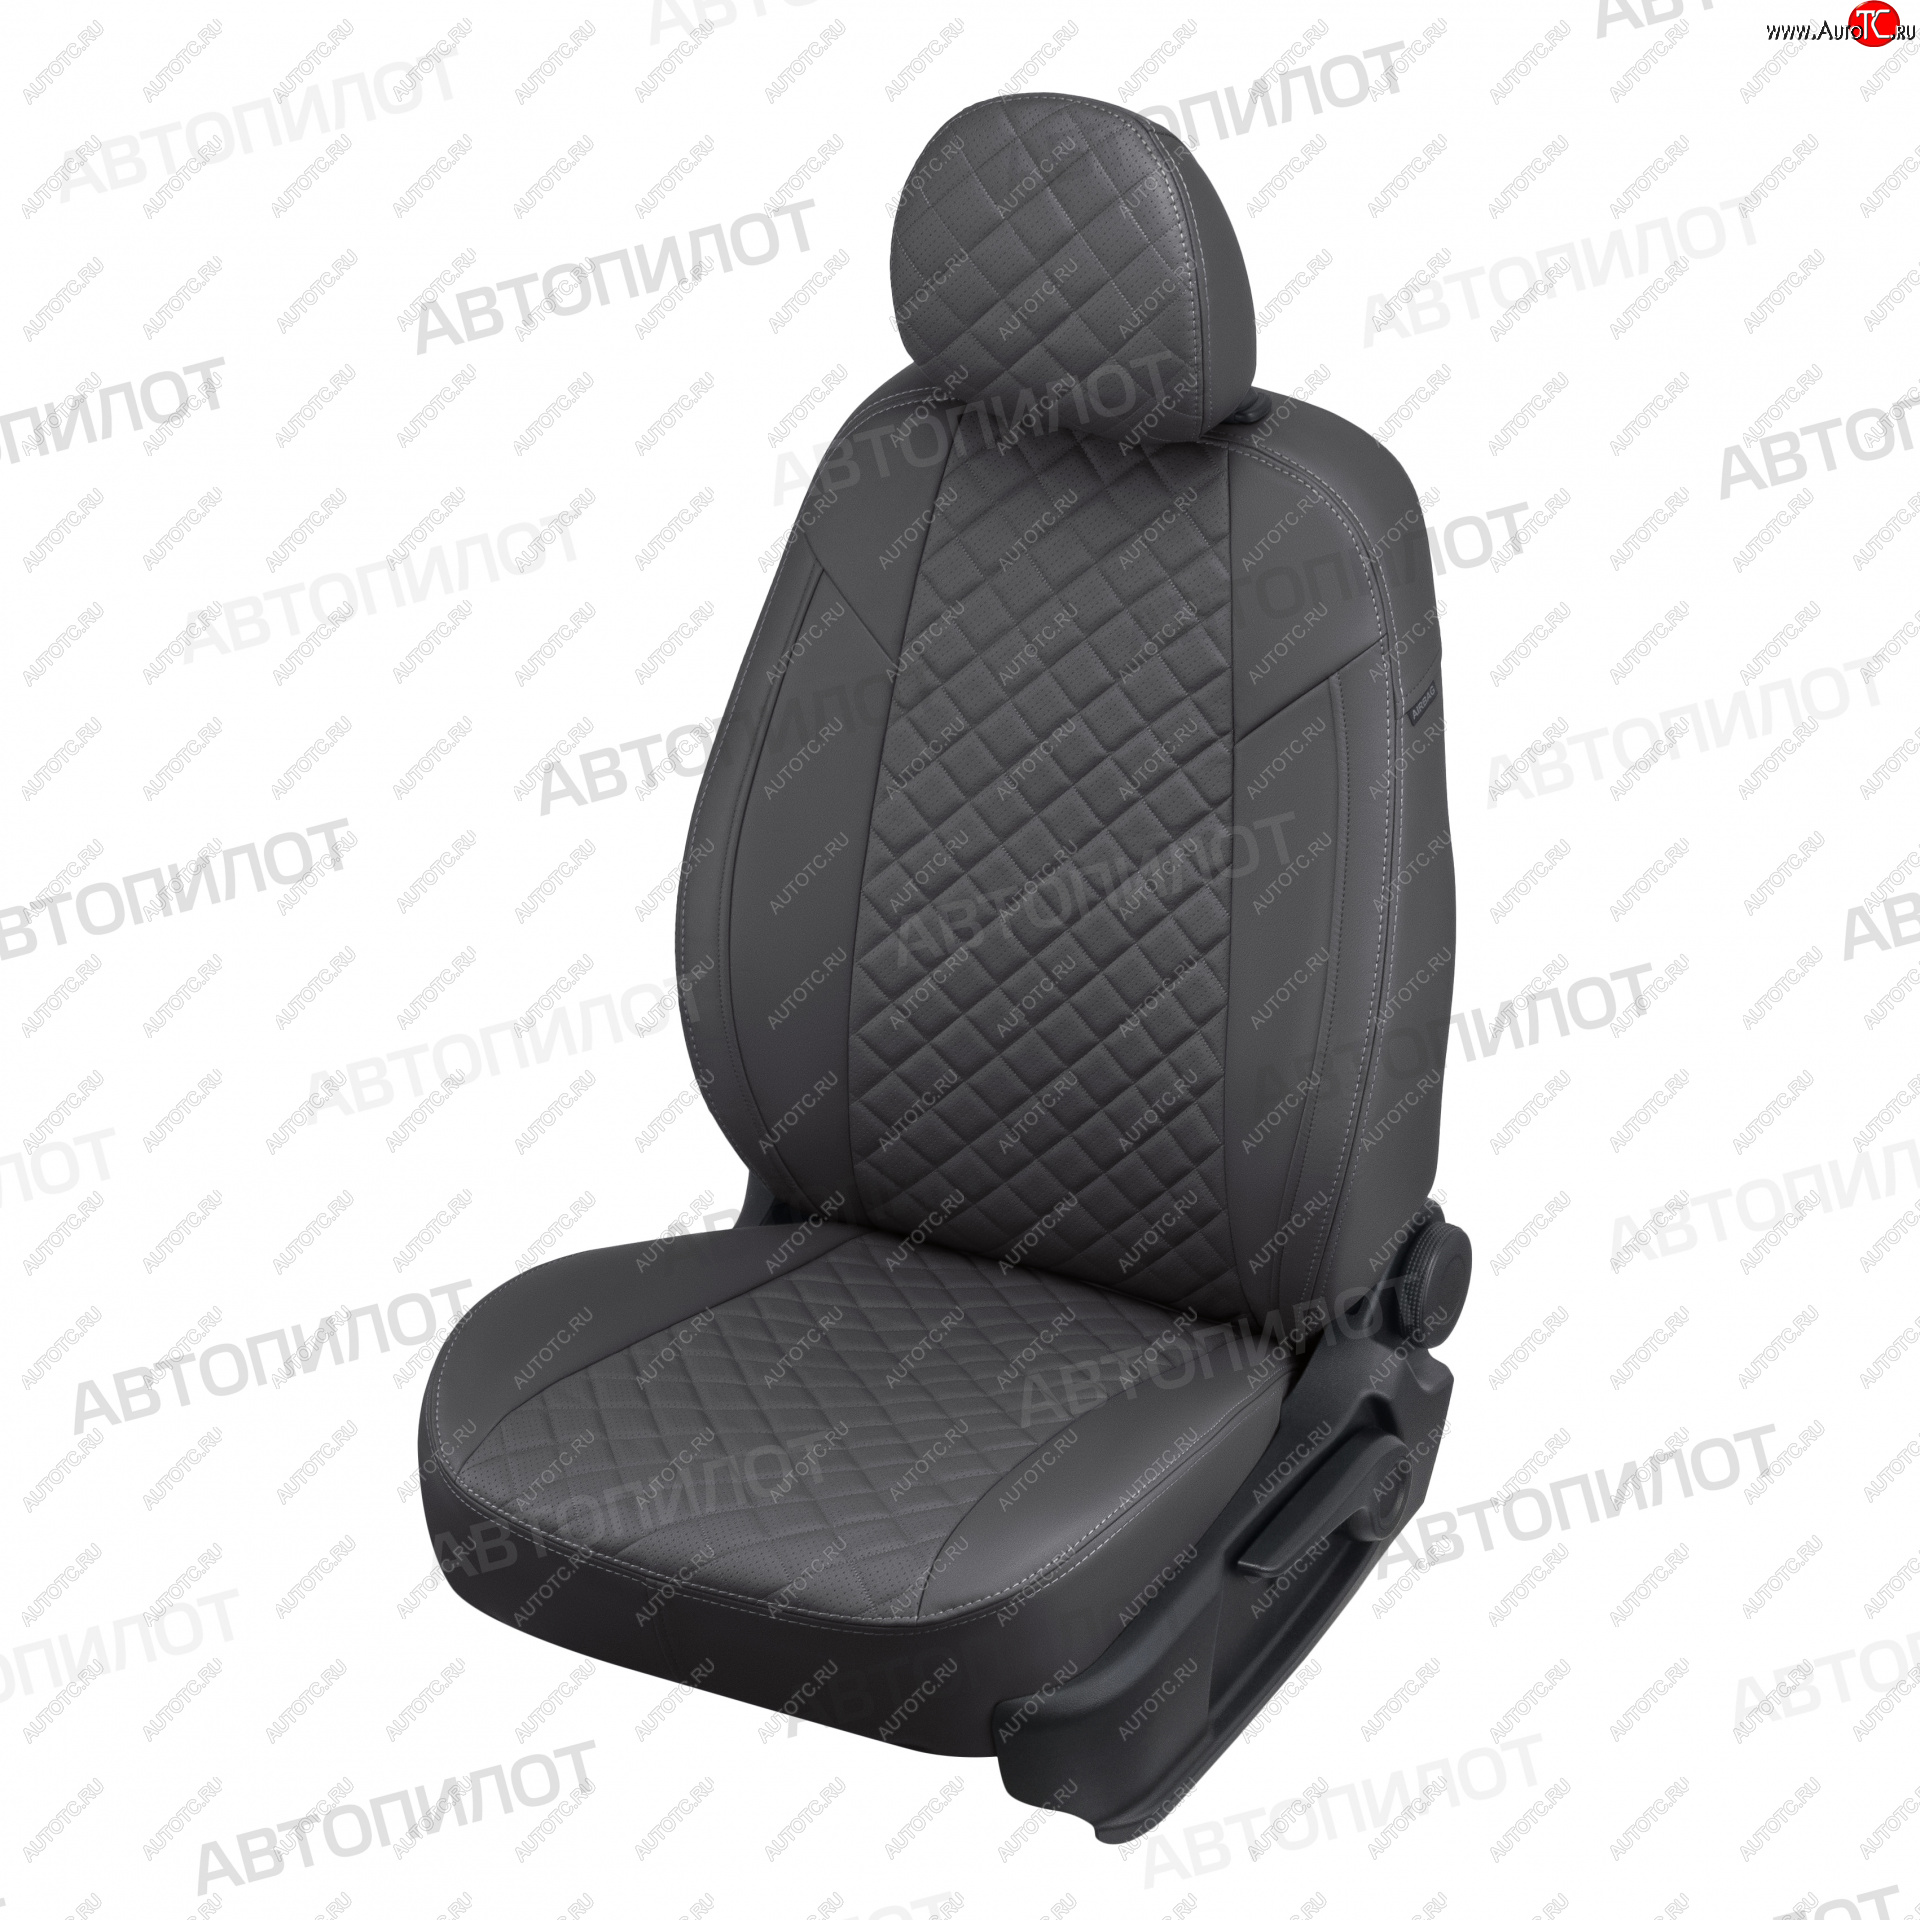 21 599 р. Чехлы сидений (9 мест, экокожа) Автопилот Ромб  Ford Transit  4 (2014-2021) (темно-серый)